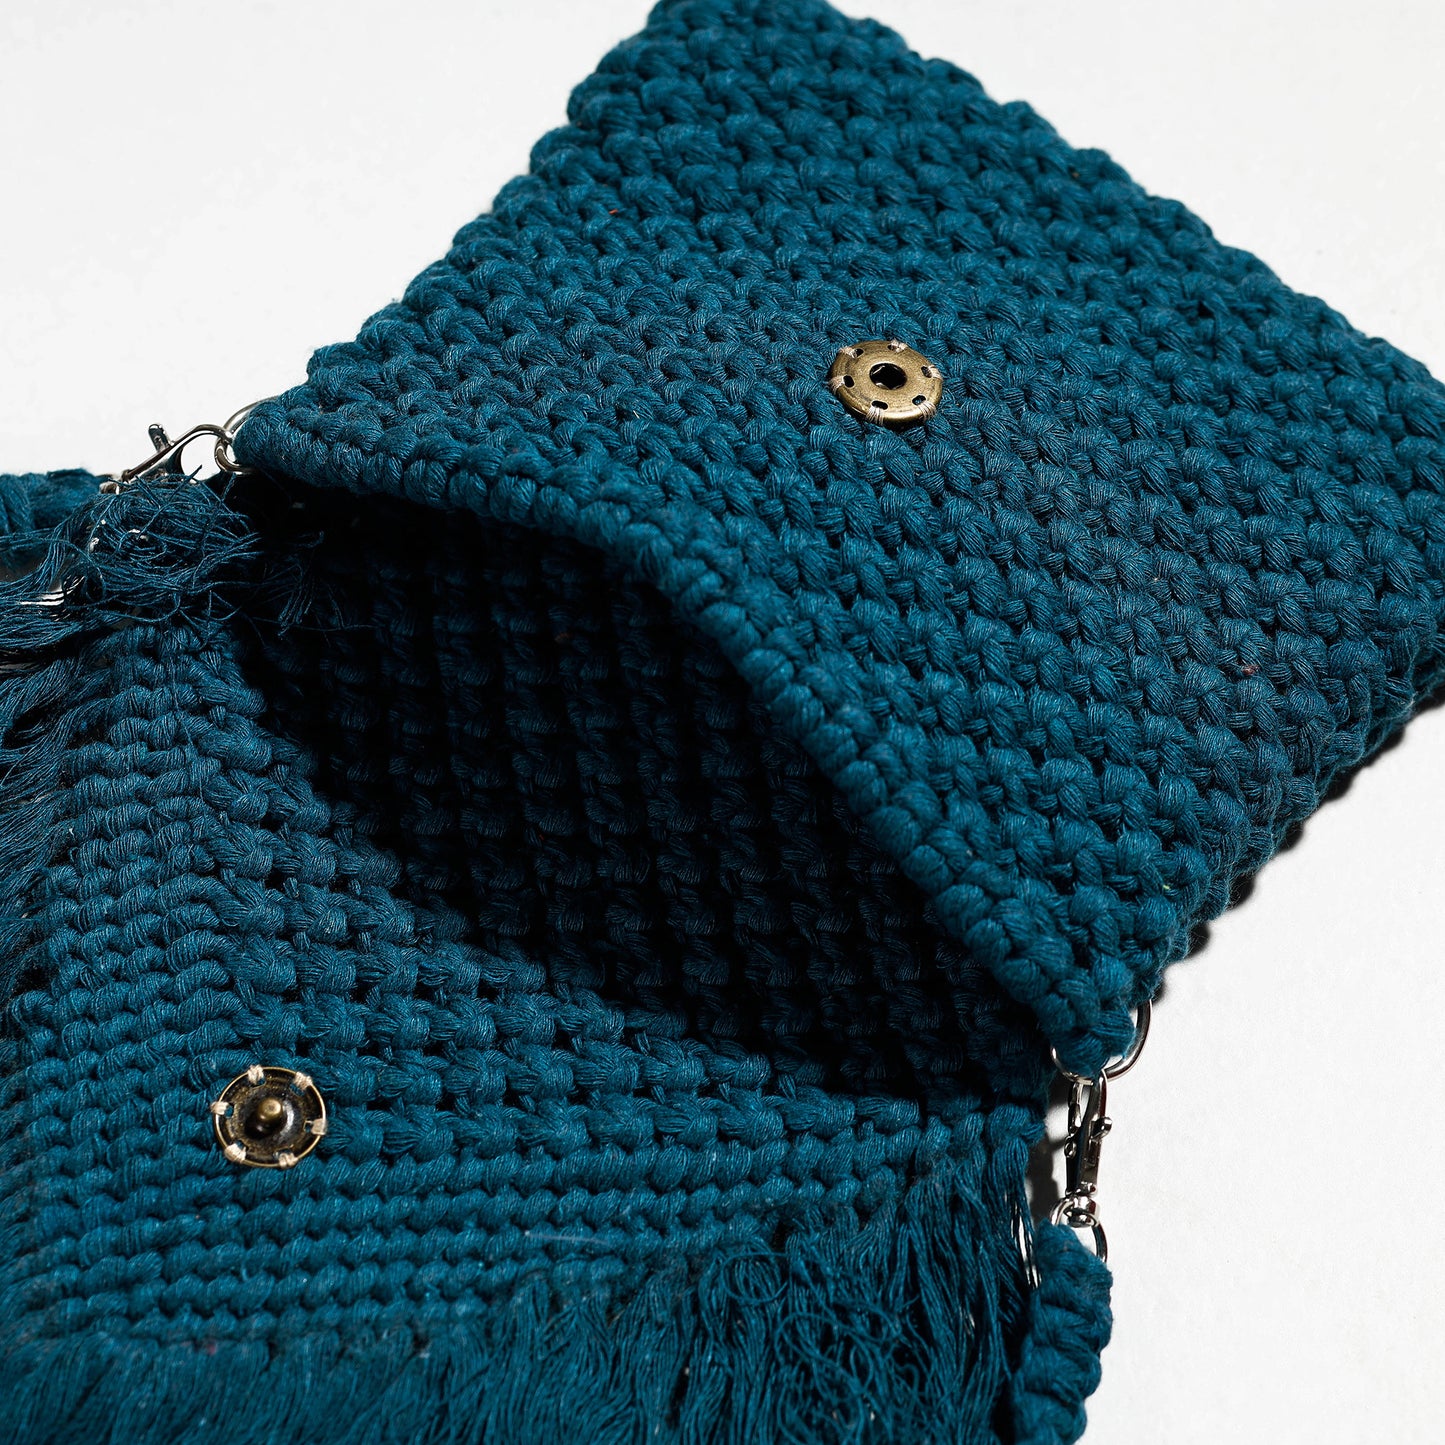 Blue - Thread Work Handcrafted Macrame Sling Bag